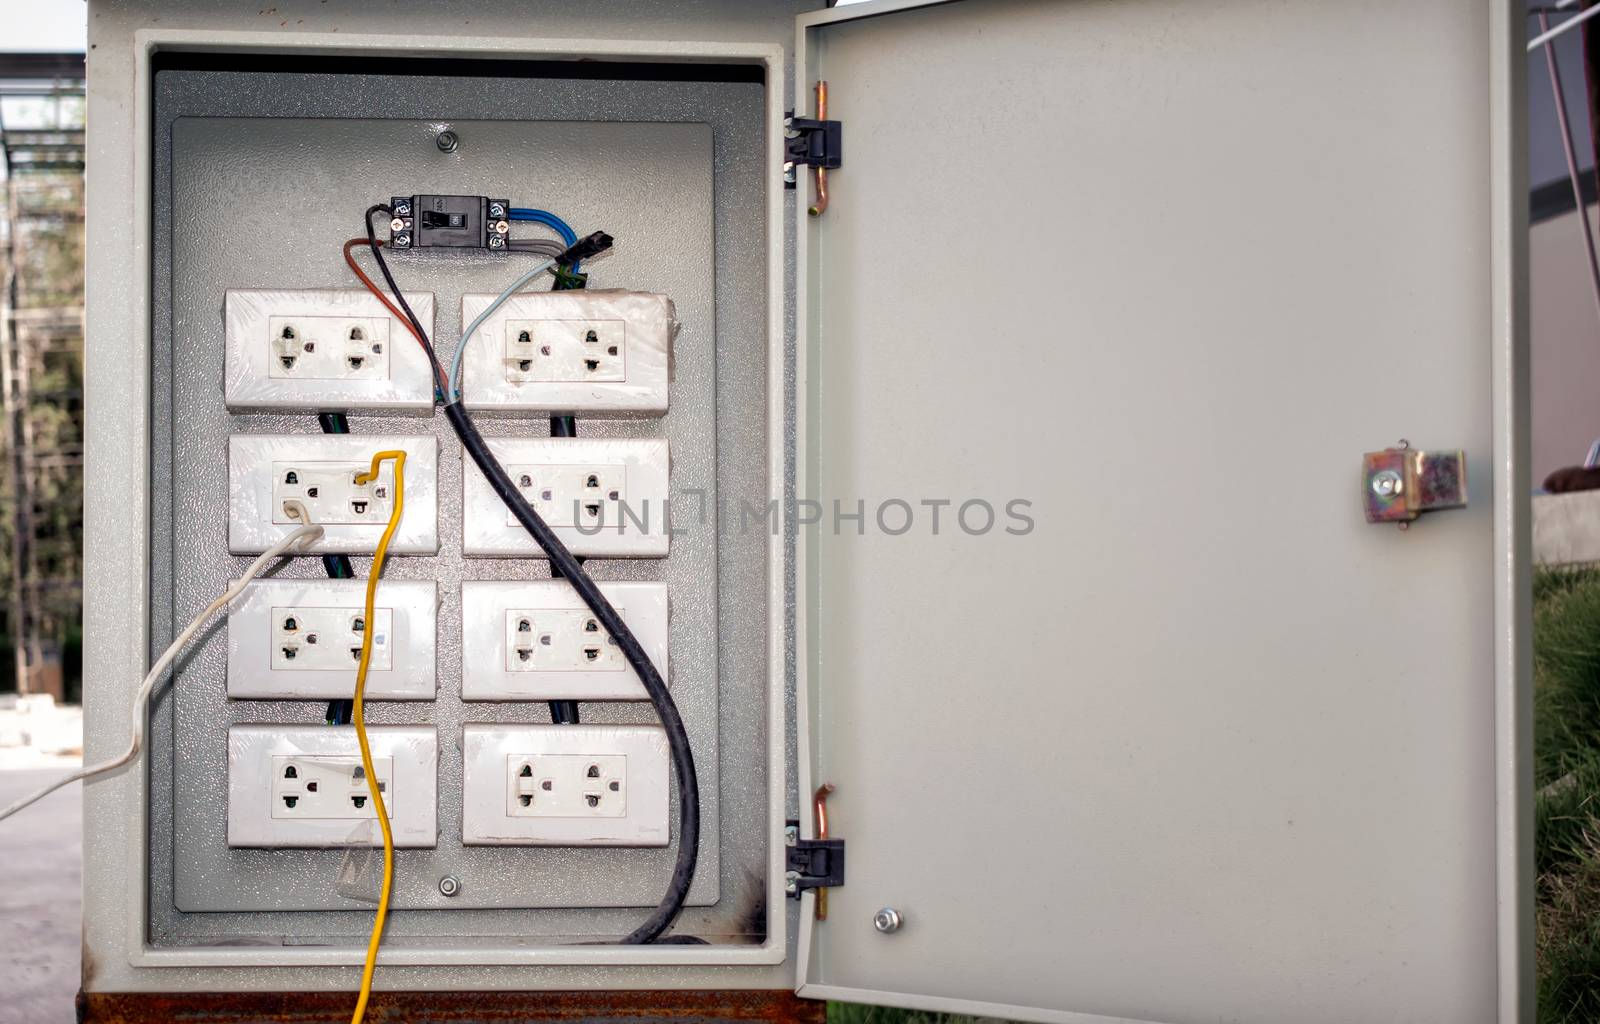 Dangerously Wired Electrical Sockets in a Breaker Box. by seika_chujo